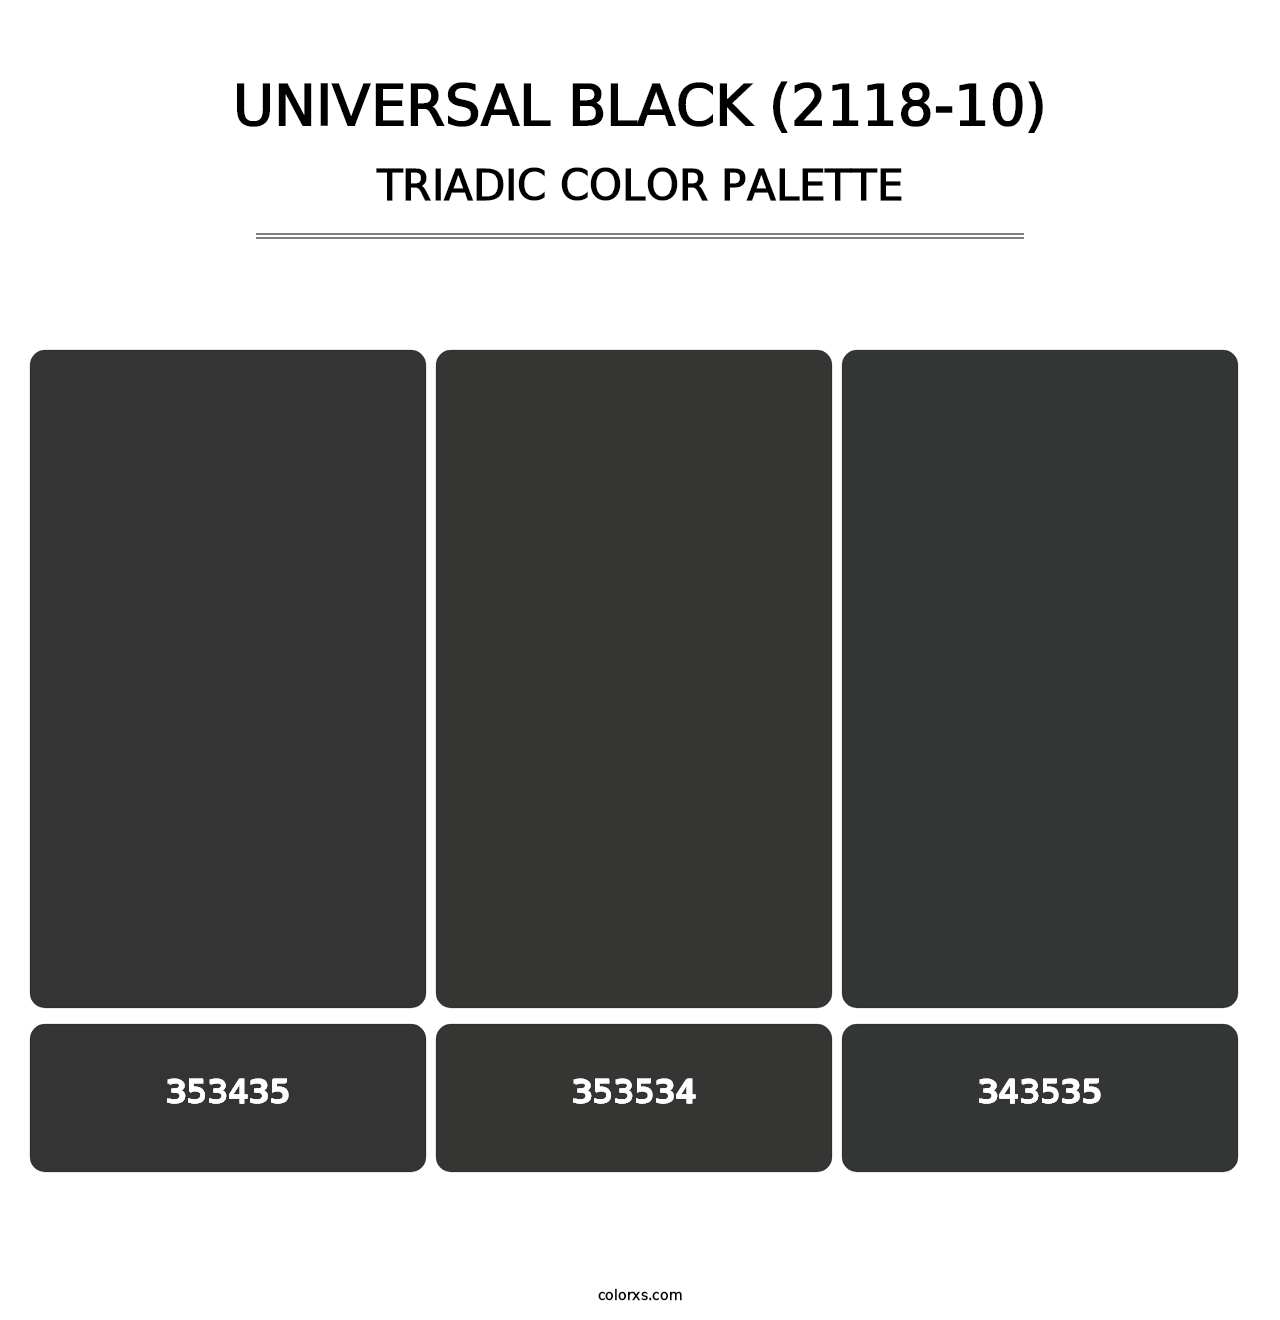 Universal Black (2118-10) - Triadic Color Palette